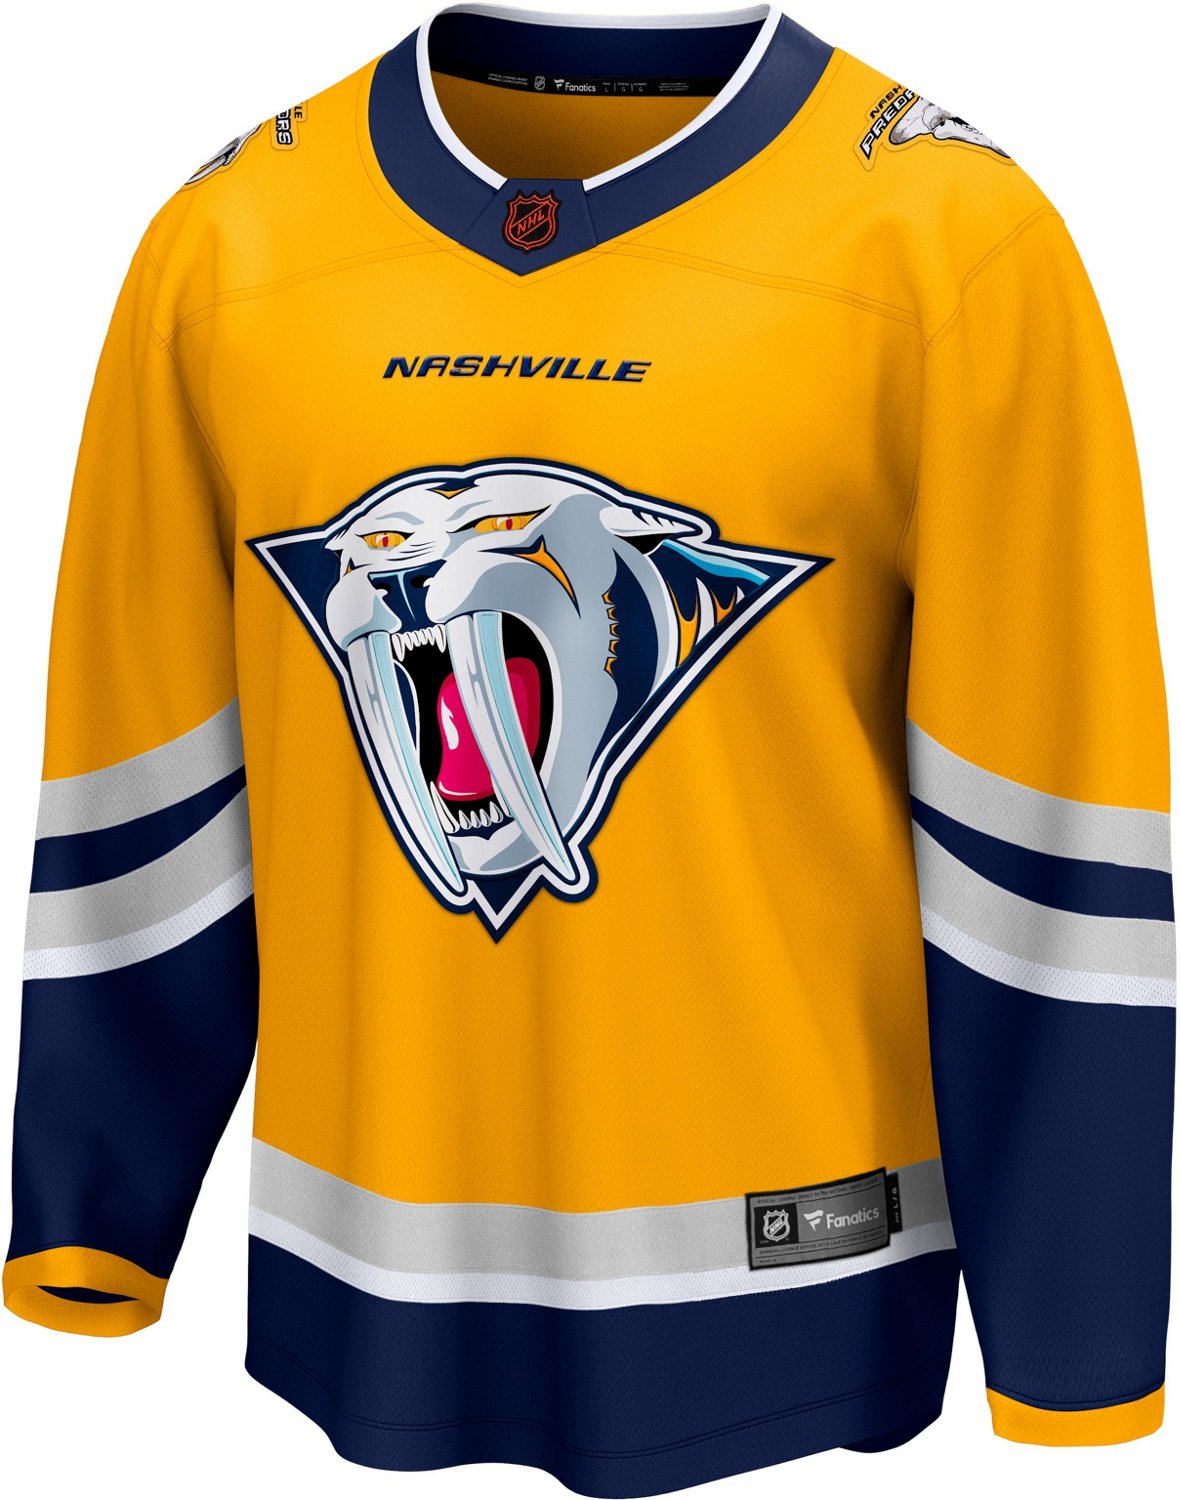 Nashville Predators + Tennessee Titans alternate jersey